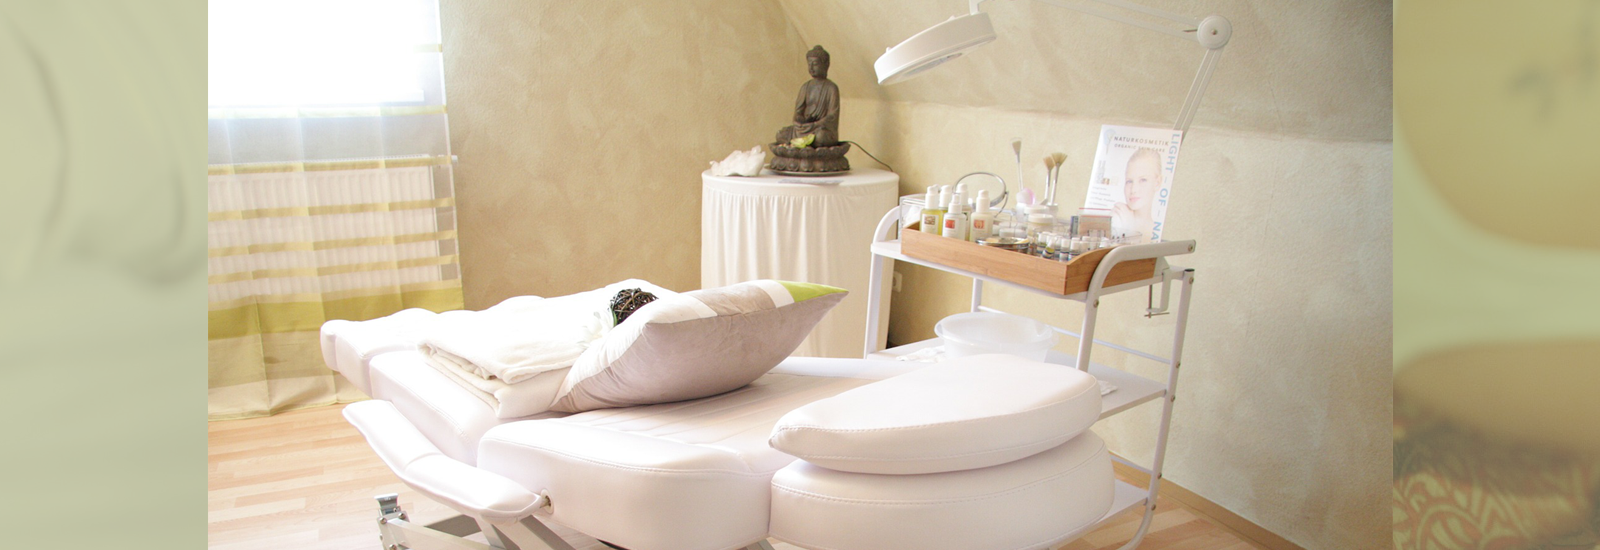 Superb Massage Tables, Top Quality Massage Tables